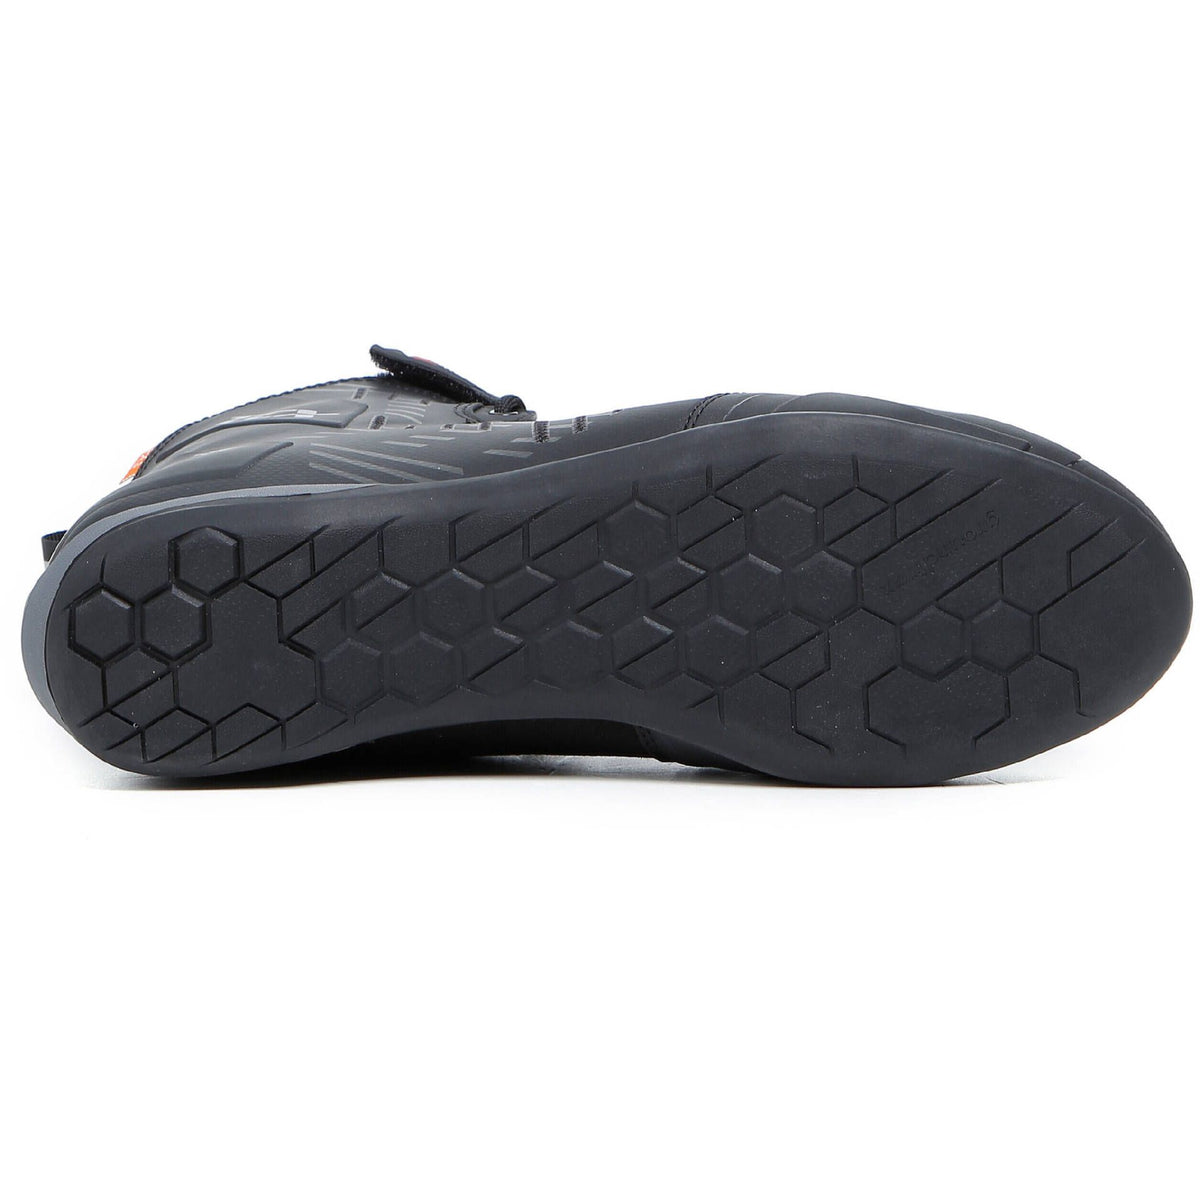 TCX Ro4d Waterproof Shoes